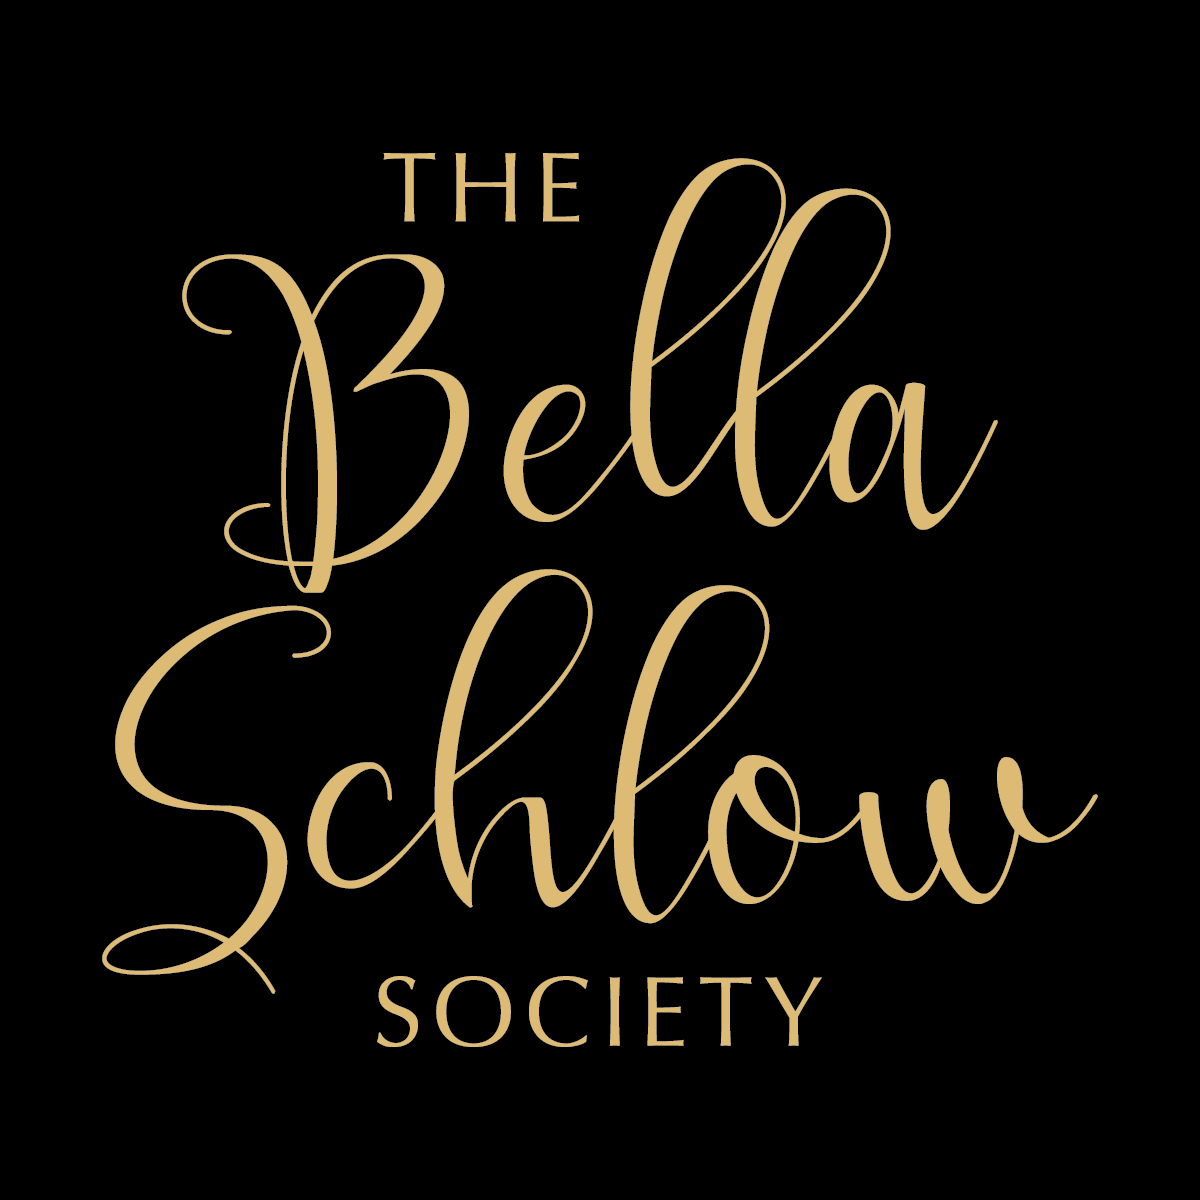 The Bella Schlow Society in script font